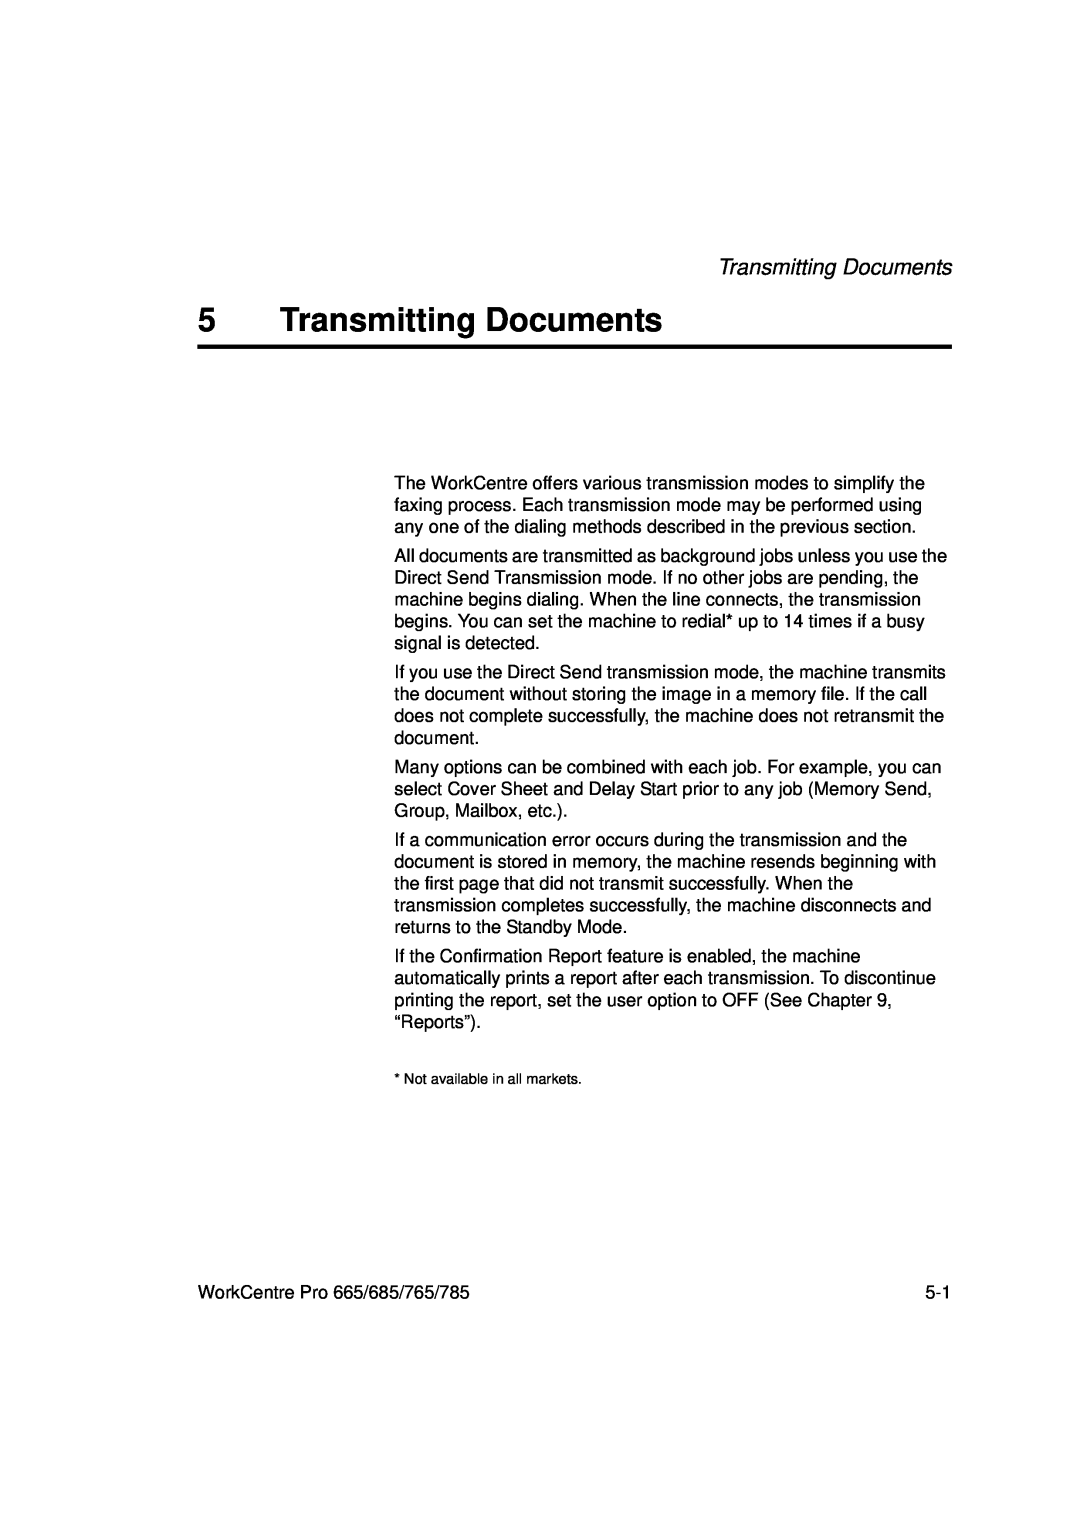 Xerox 785, 765, 665, 685 manual Transmitting Documents 